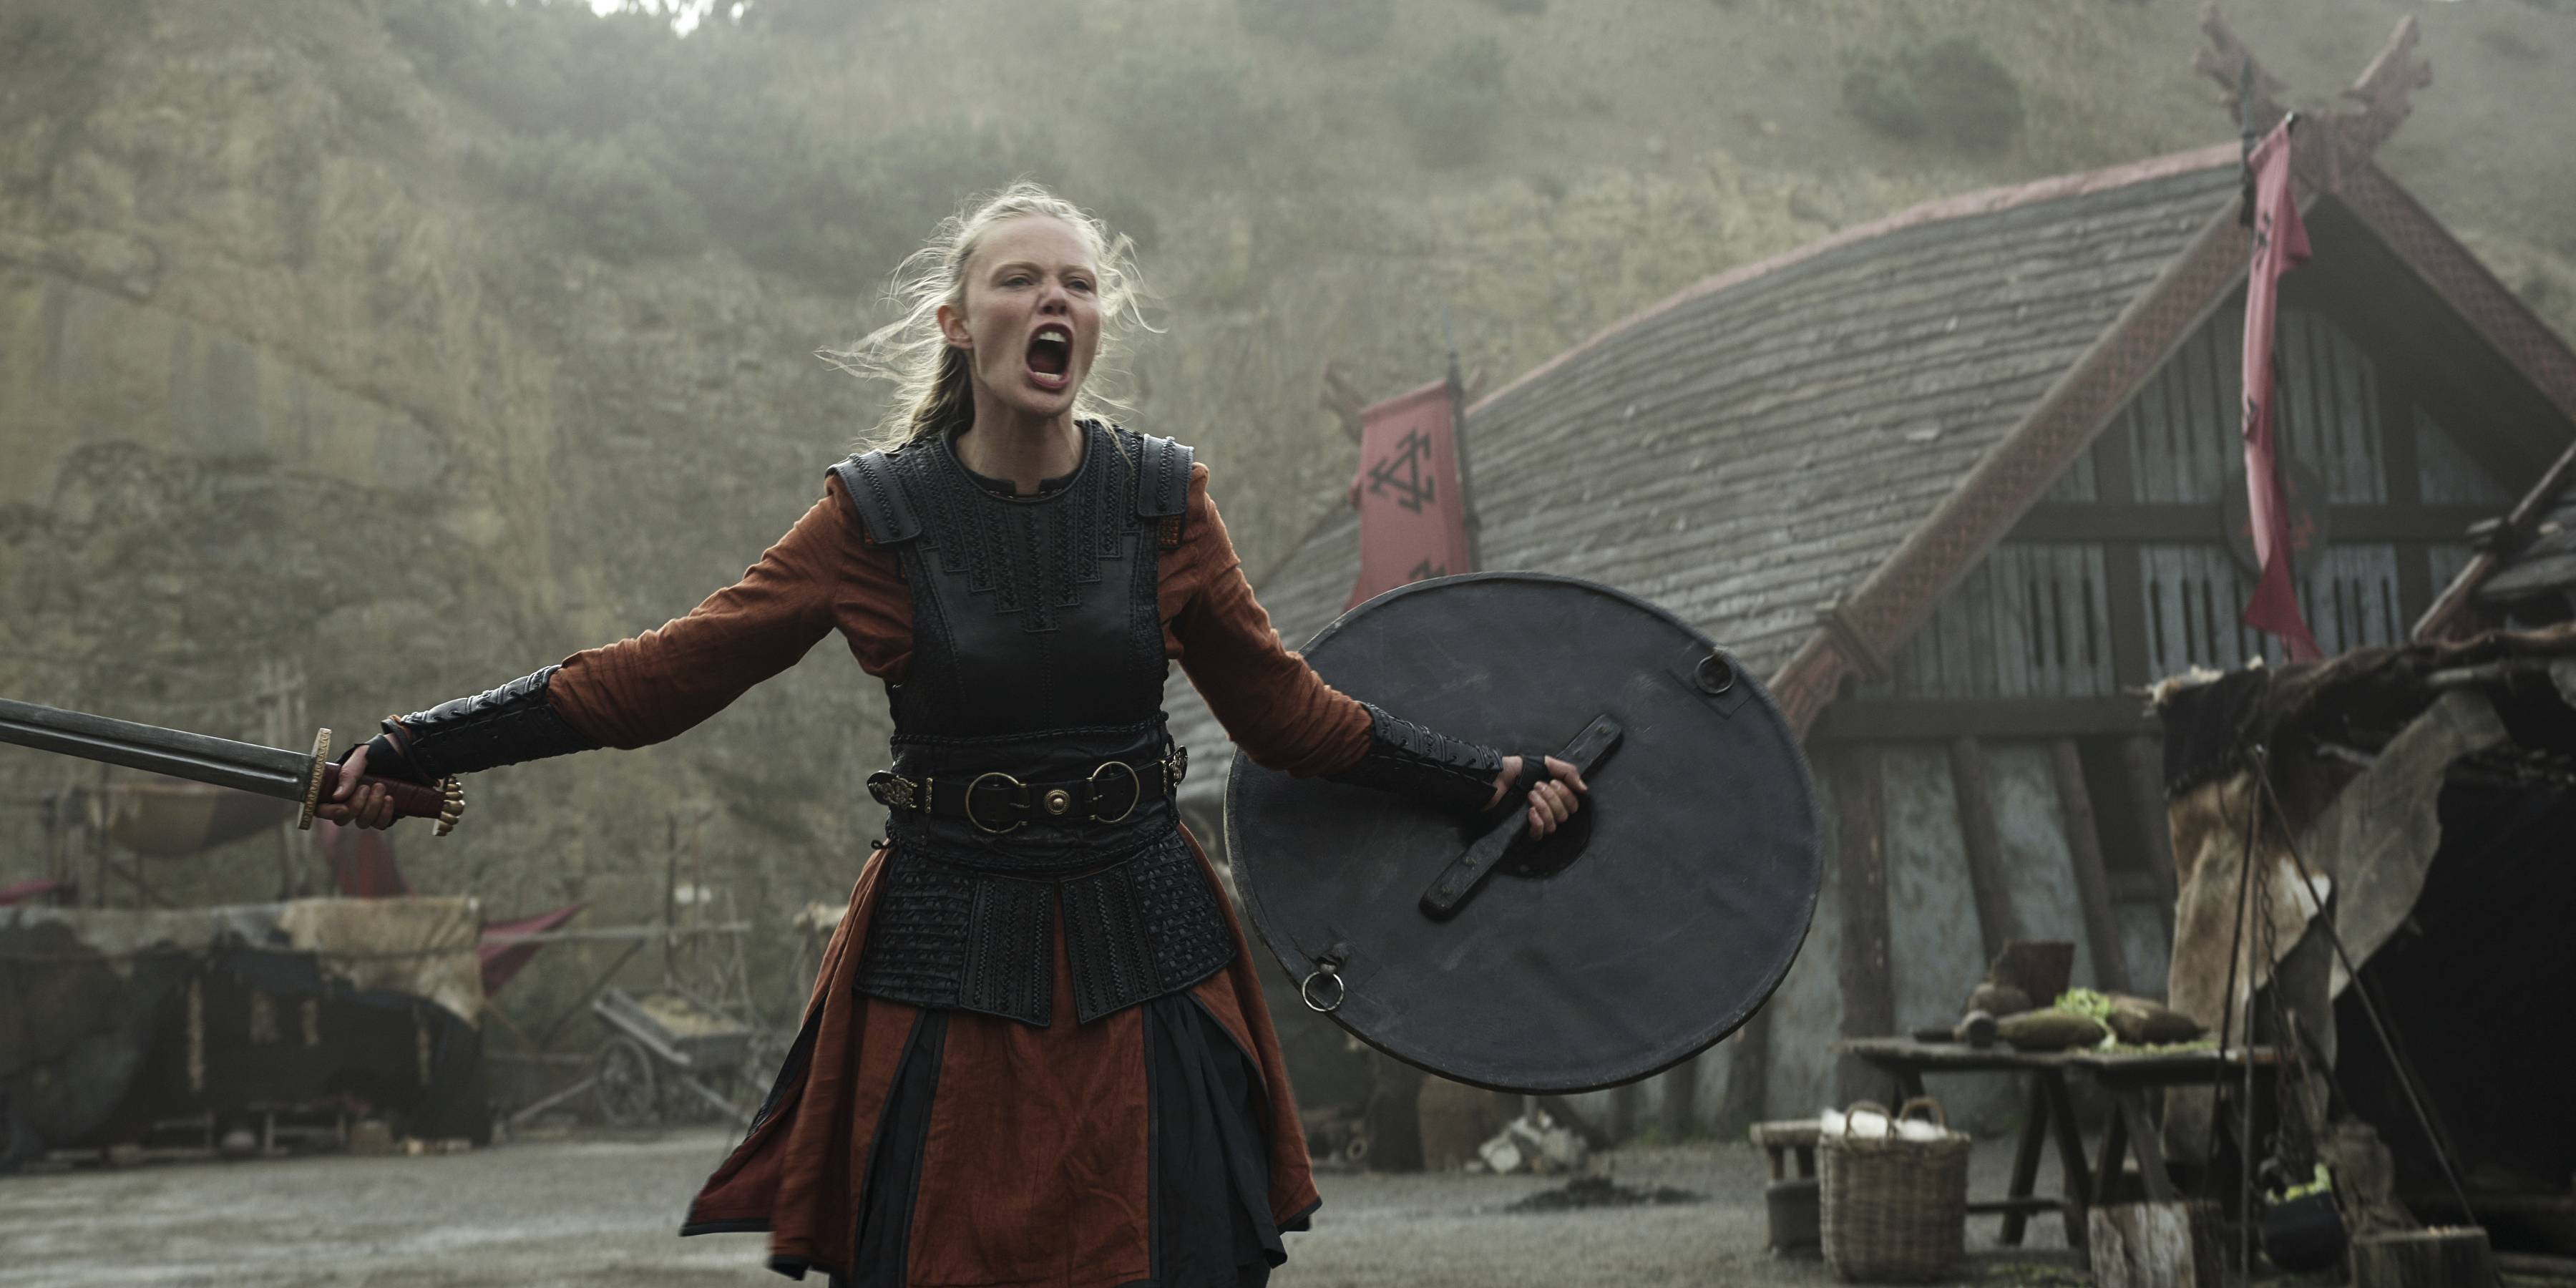 viking woman screams with sword